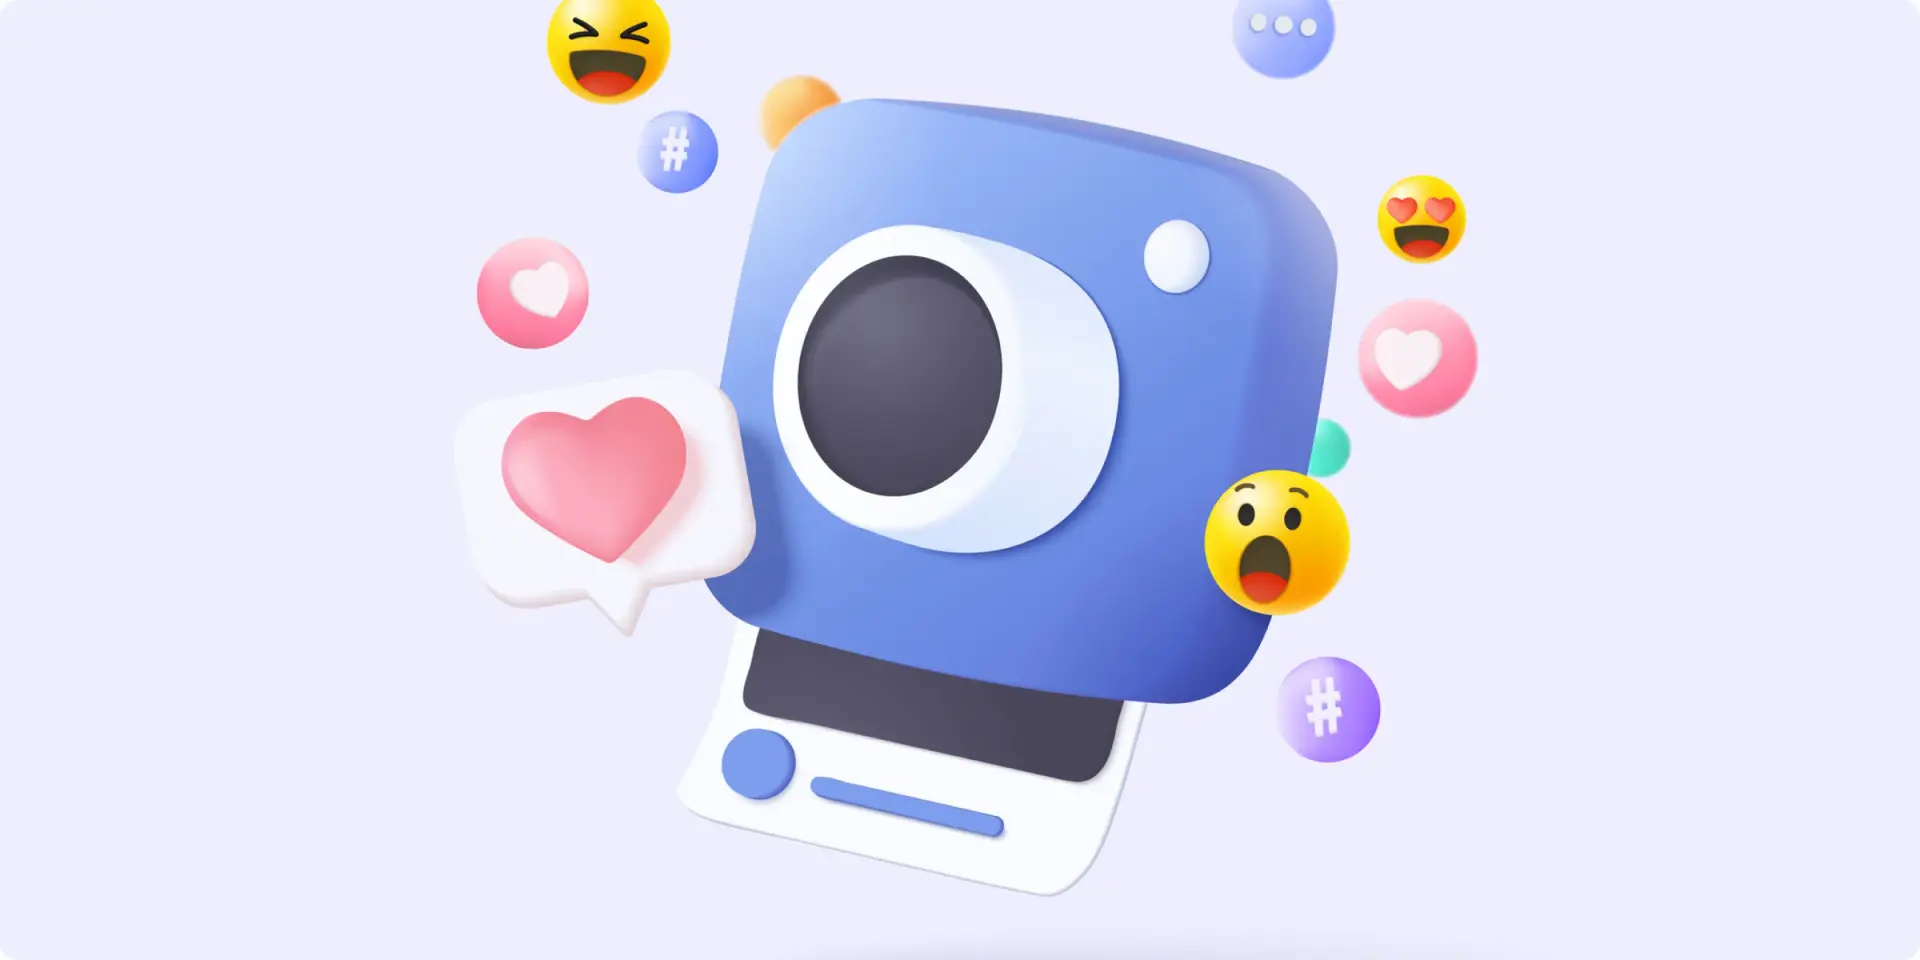 Decorative illustration of a camera with emoji floating around it.